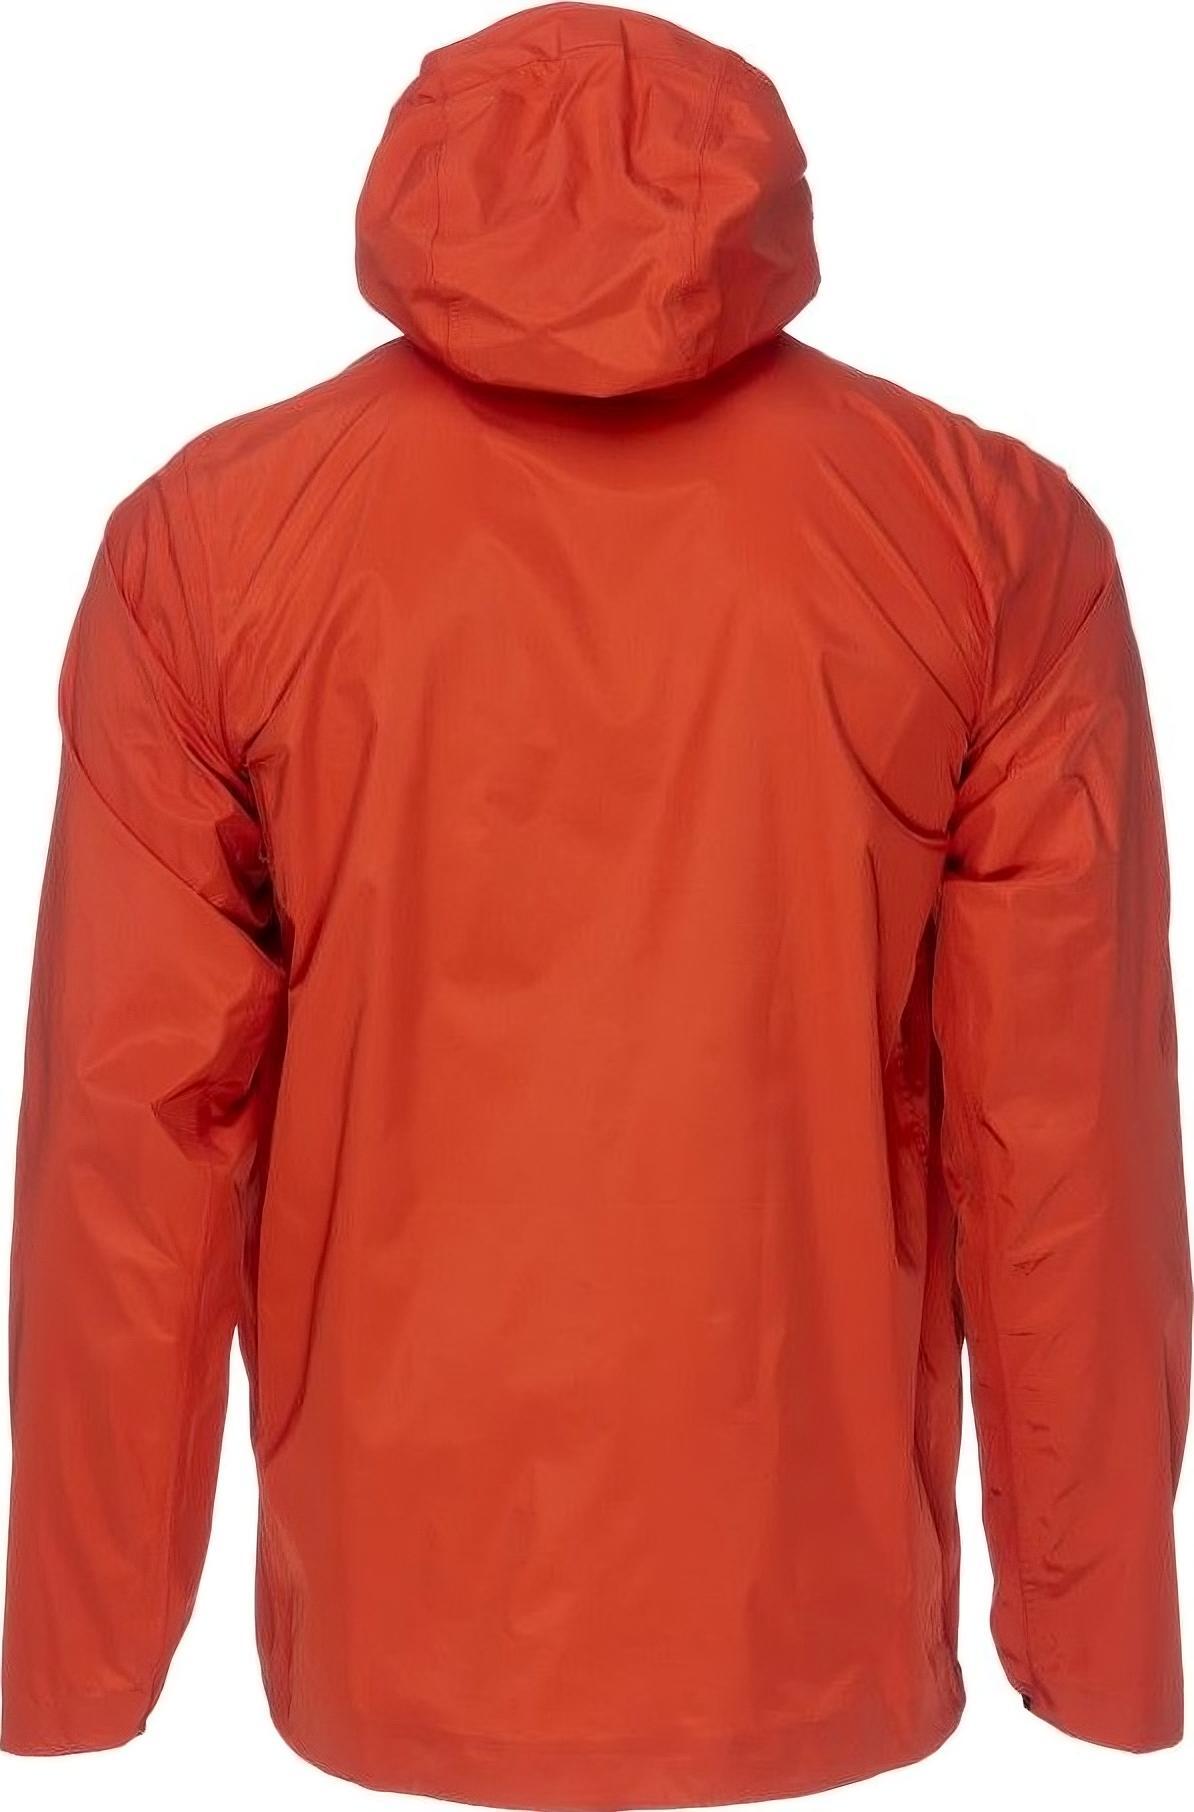 Куртка мужская Turbat Isla Mns orange red S красный фото 3